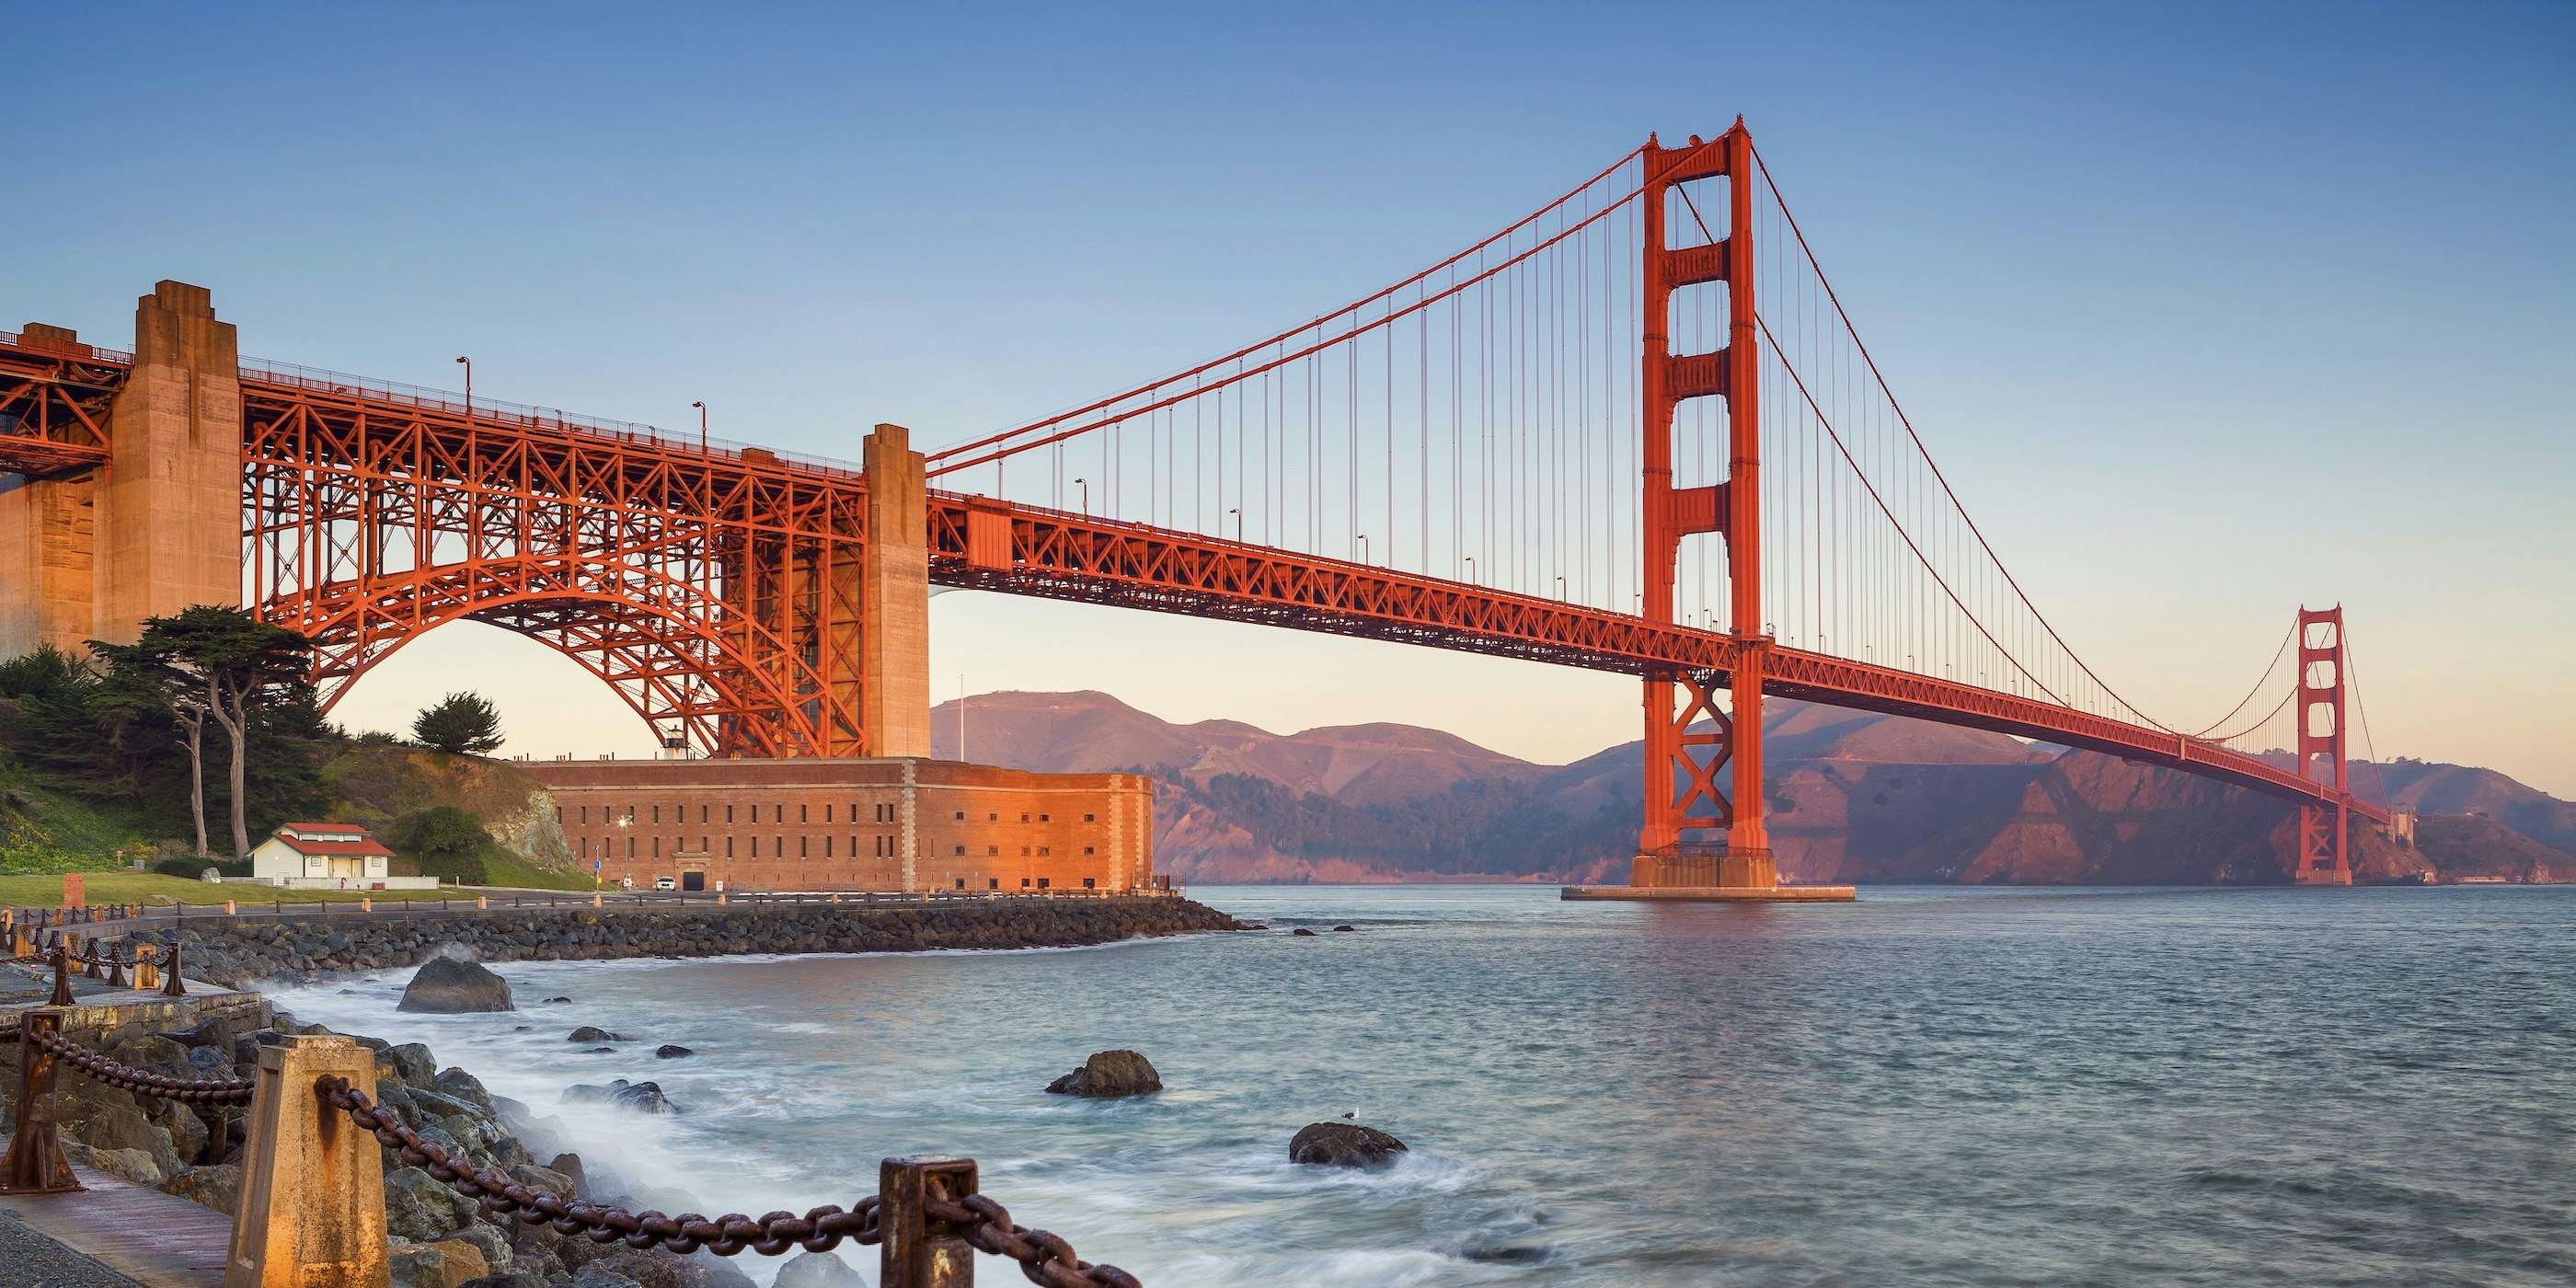 Best Views Of The Golden Gate Bridge Via